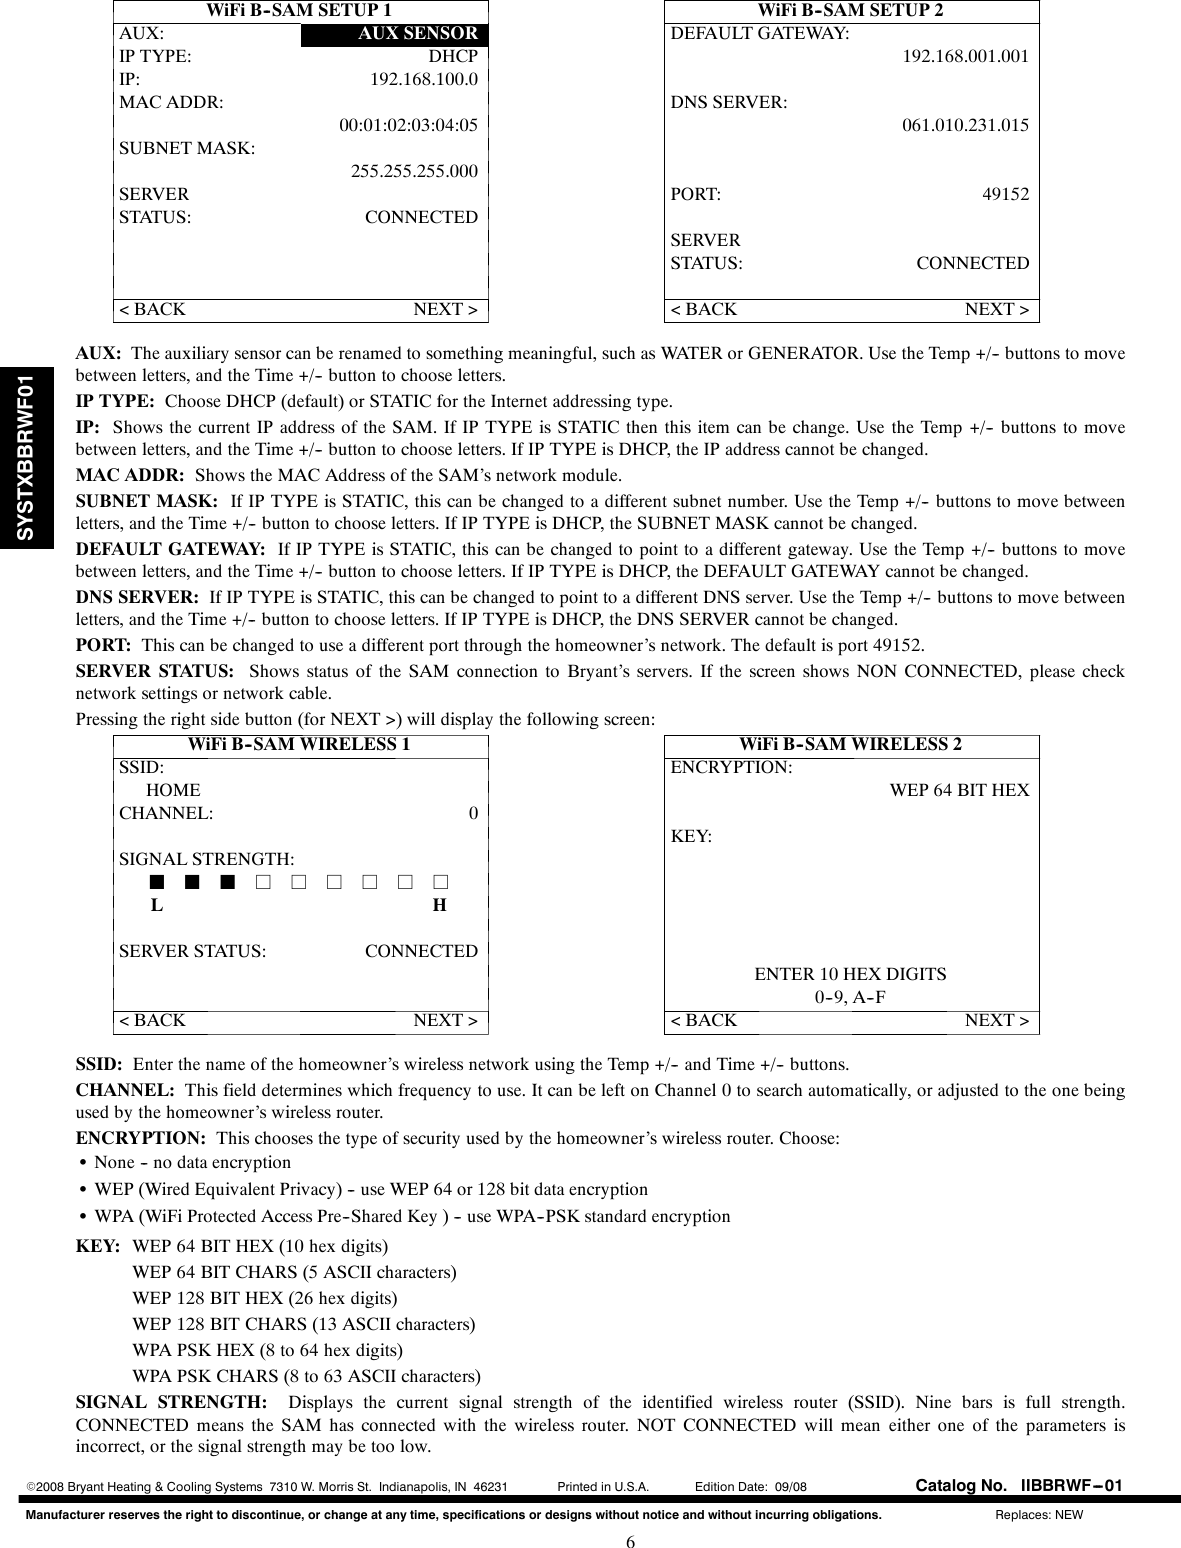 Page 6 of 6 - Bryant Bryant-Evolutionr-System-Systxbbrwf01-Users-Manual- Iibbrwf-01  Bryant-evolutionr-system-systxbbrwf01-users-manual